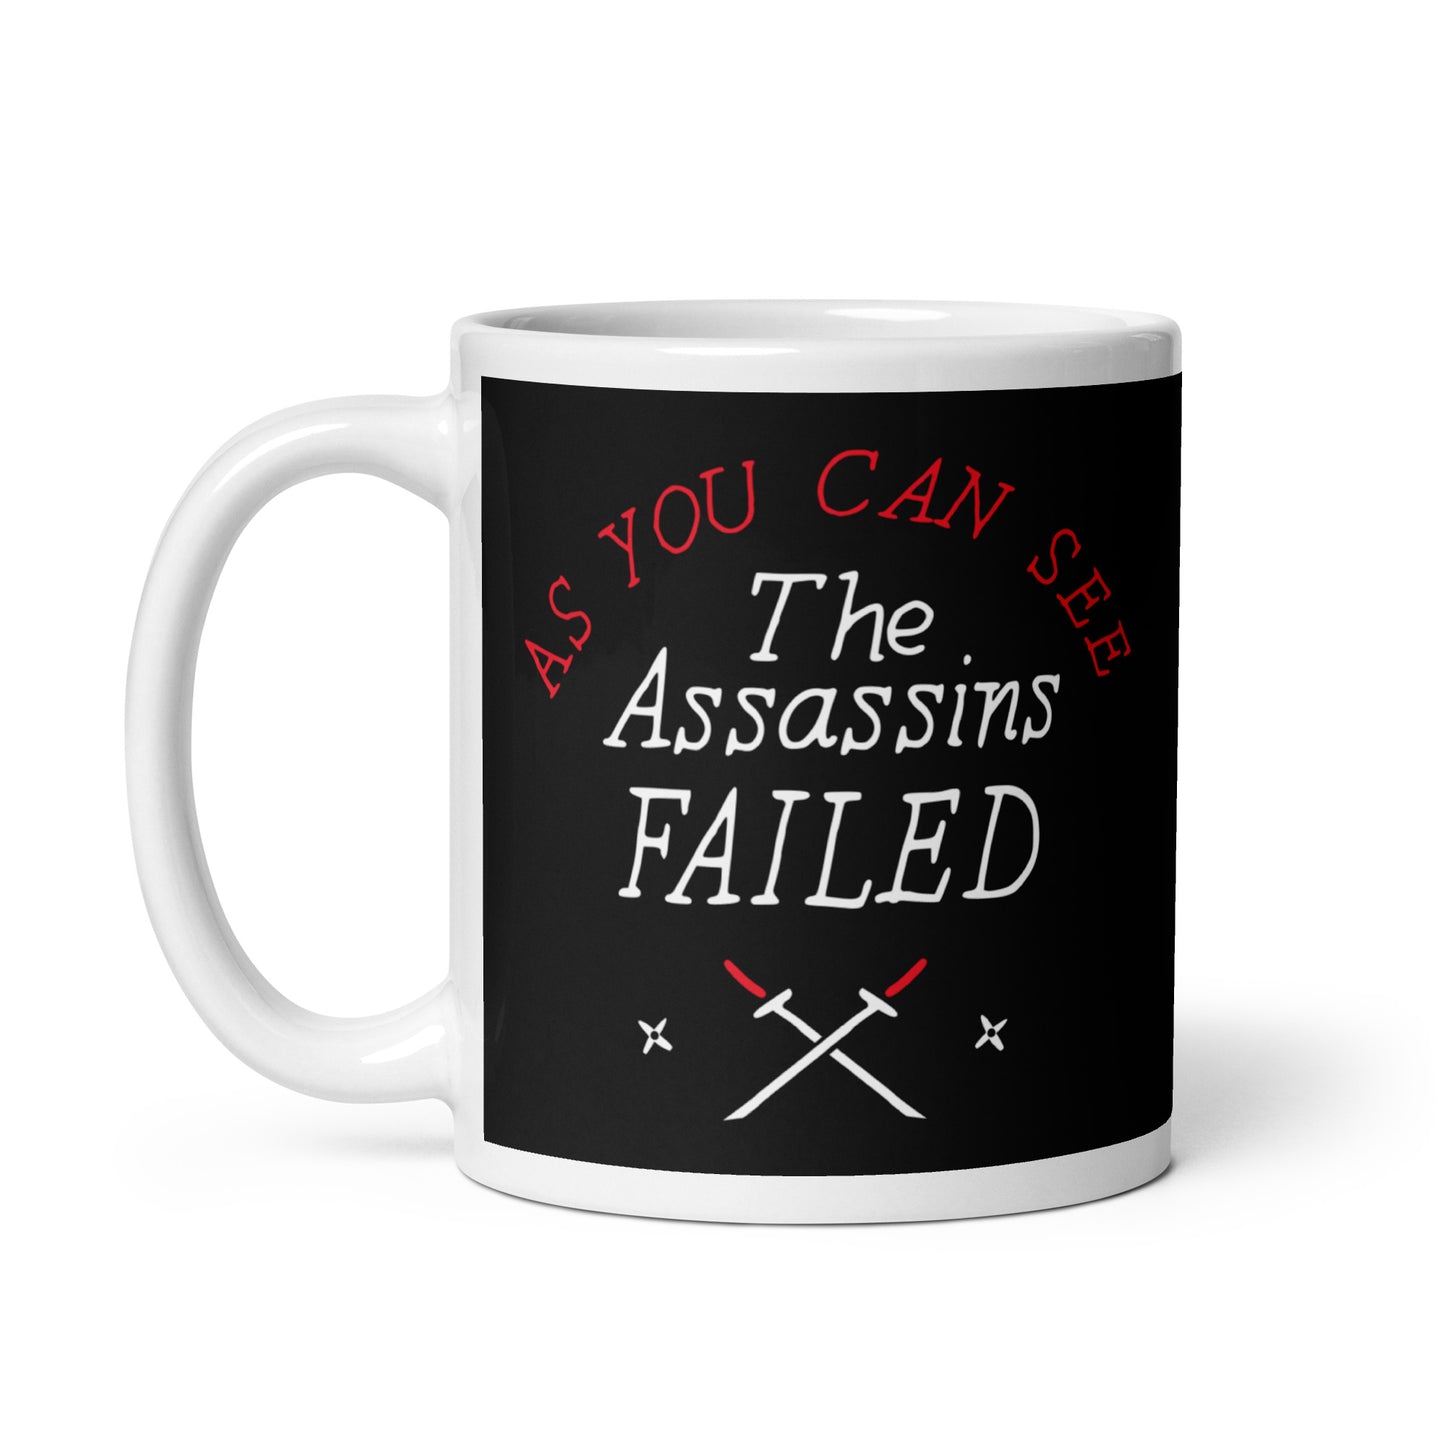 The Assassins Failed Mug